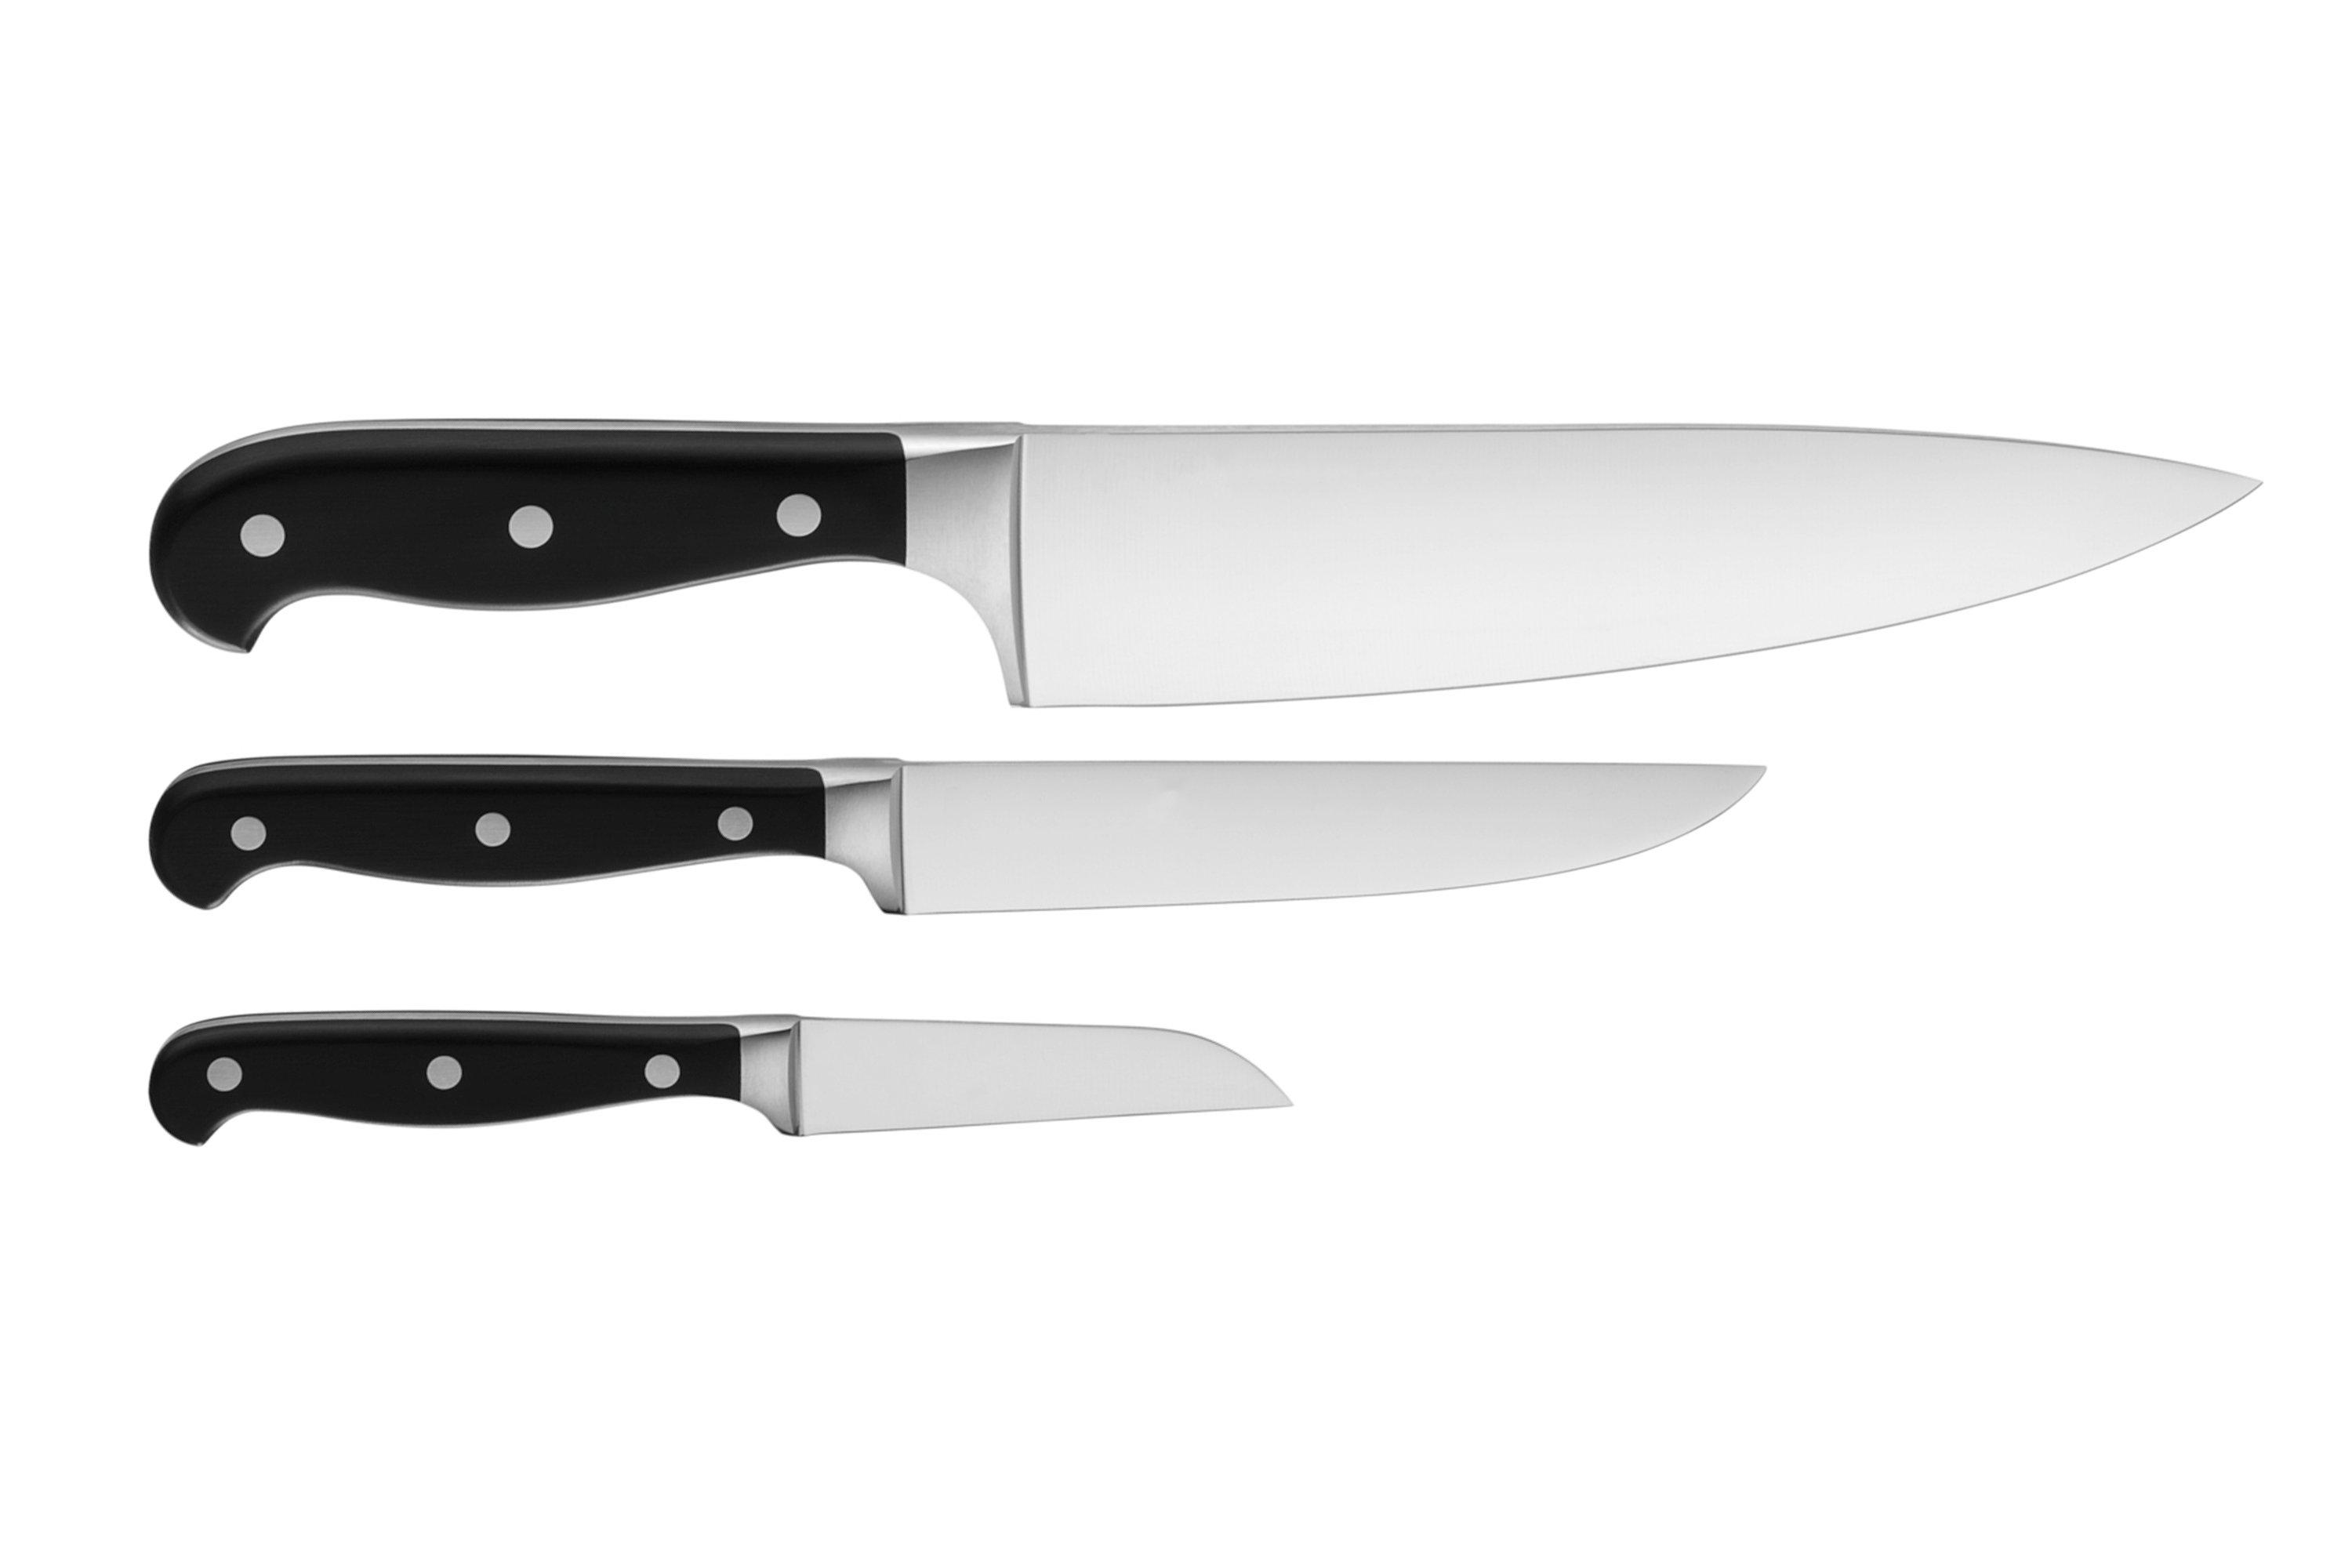 WMF Spitzenklasse Plus 1894919992, knife at Advantageously 3-piece shopping | set